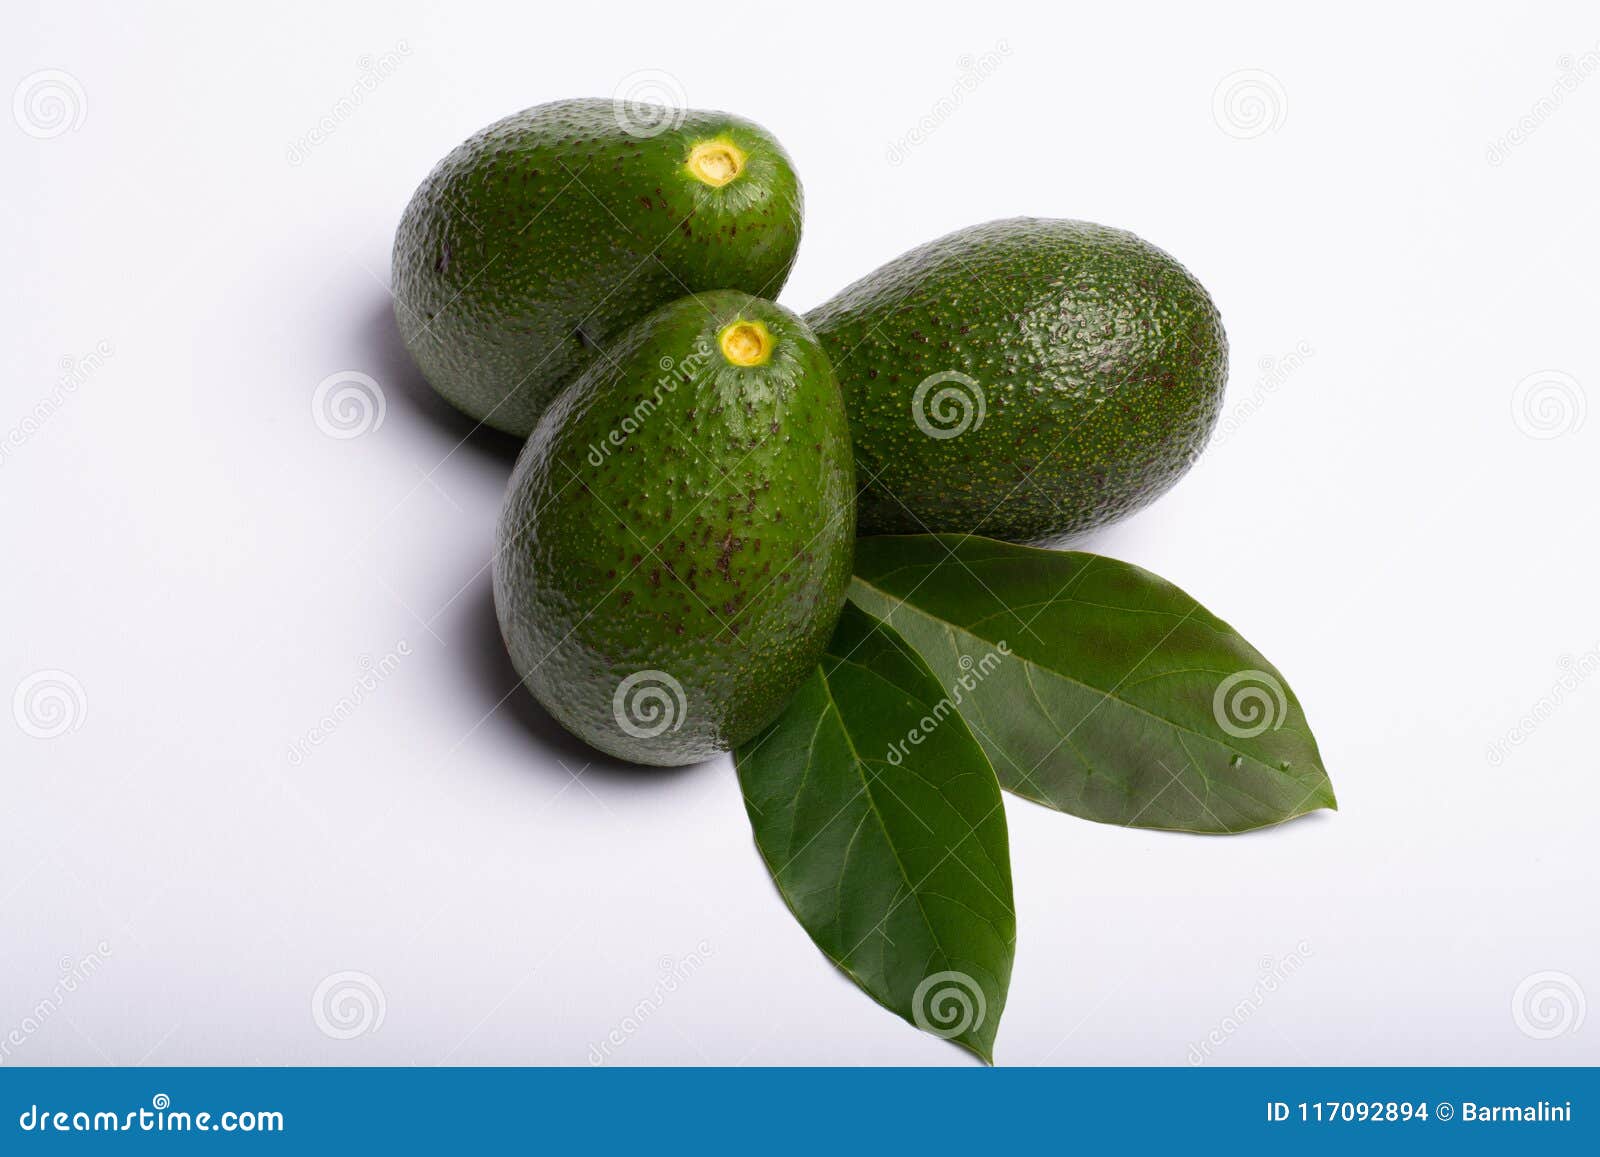 fresh organic ripe green fuerte avocado with leaves, copy space